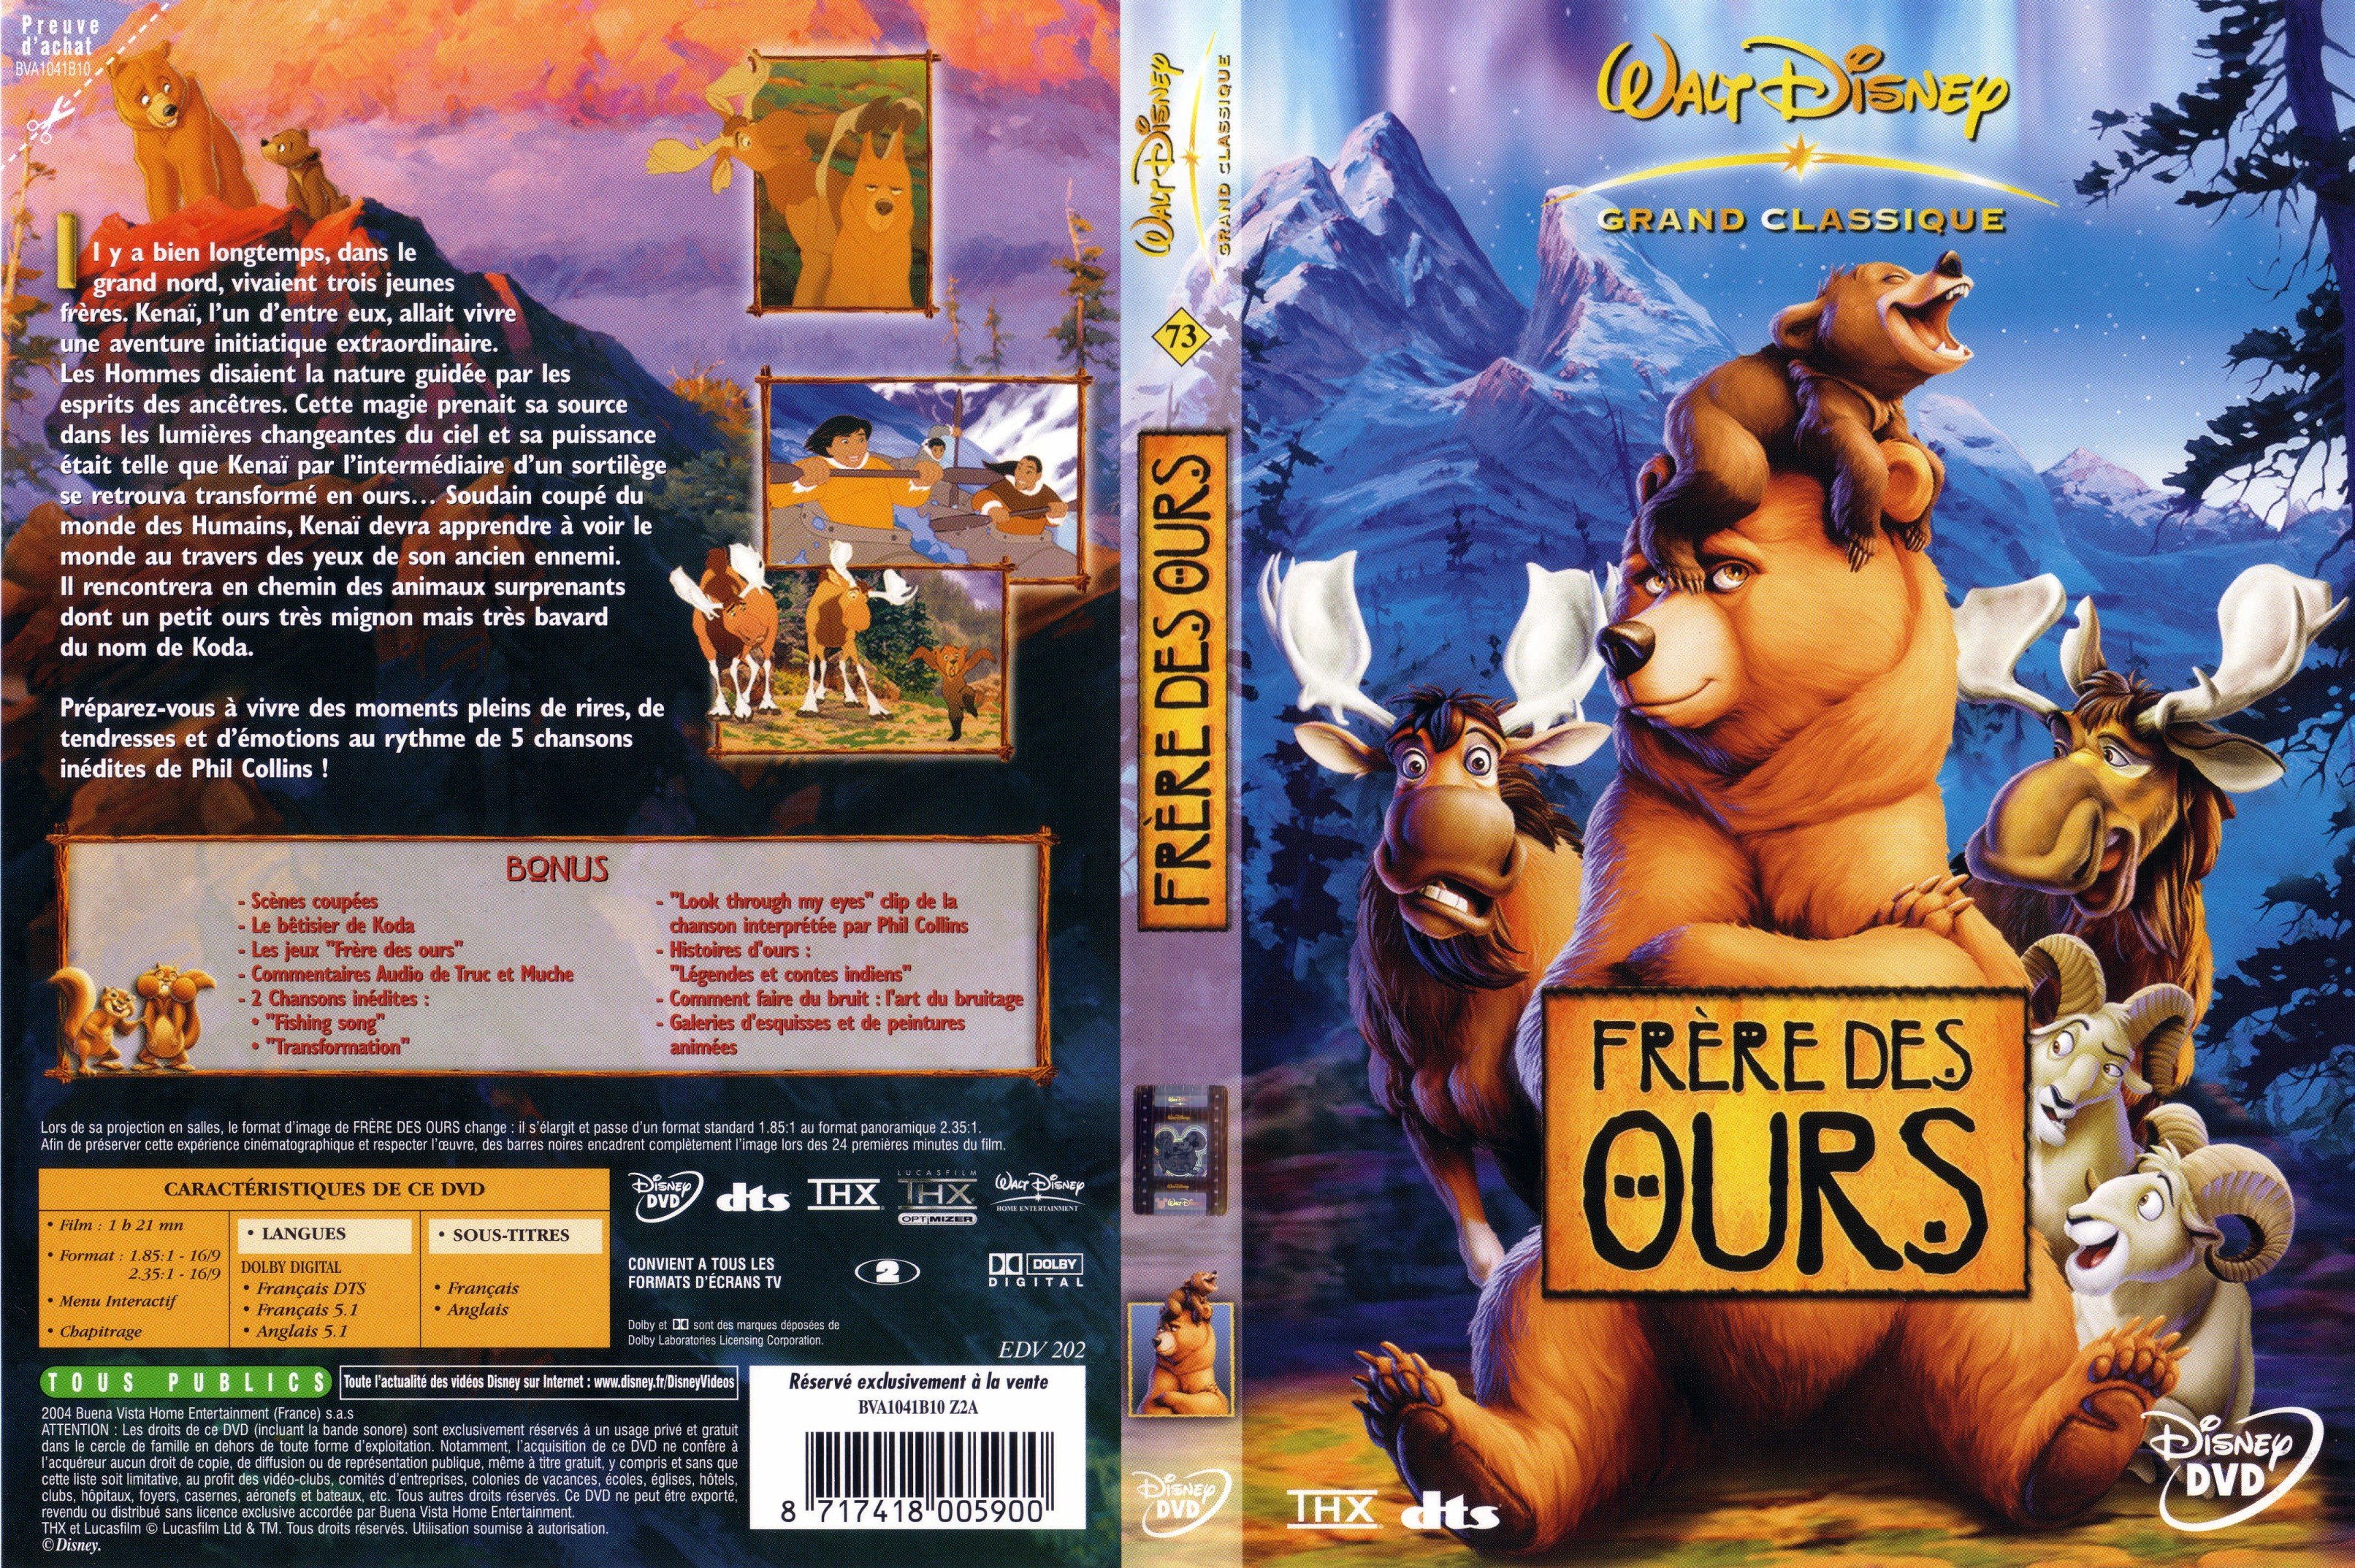 Jaquette DVD Frres des ours